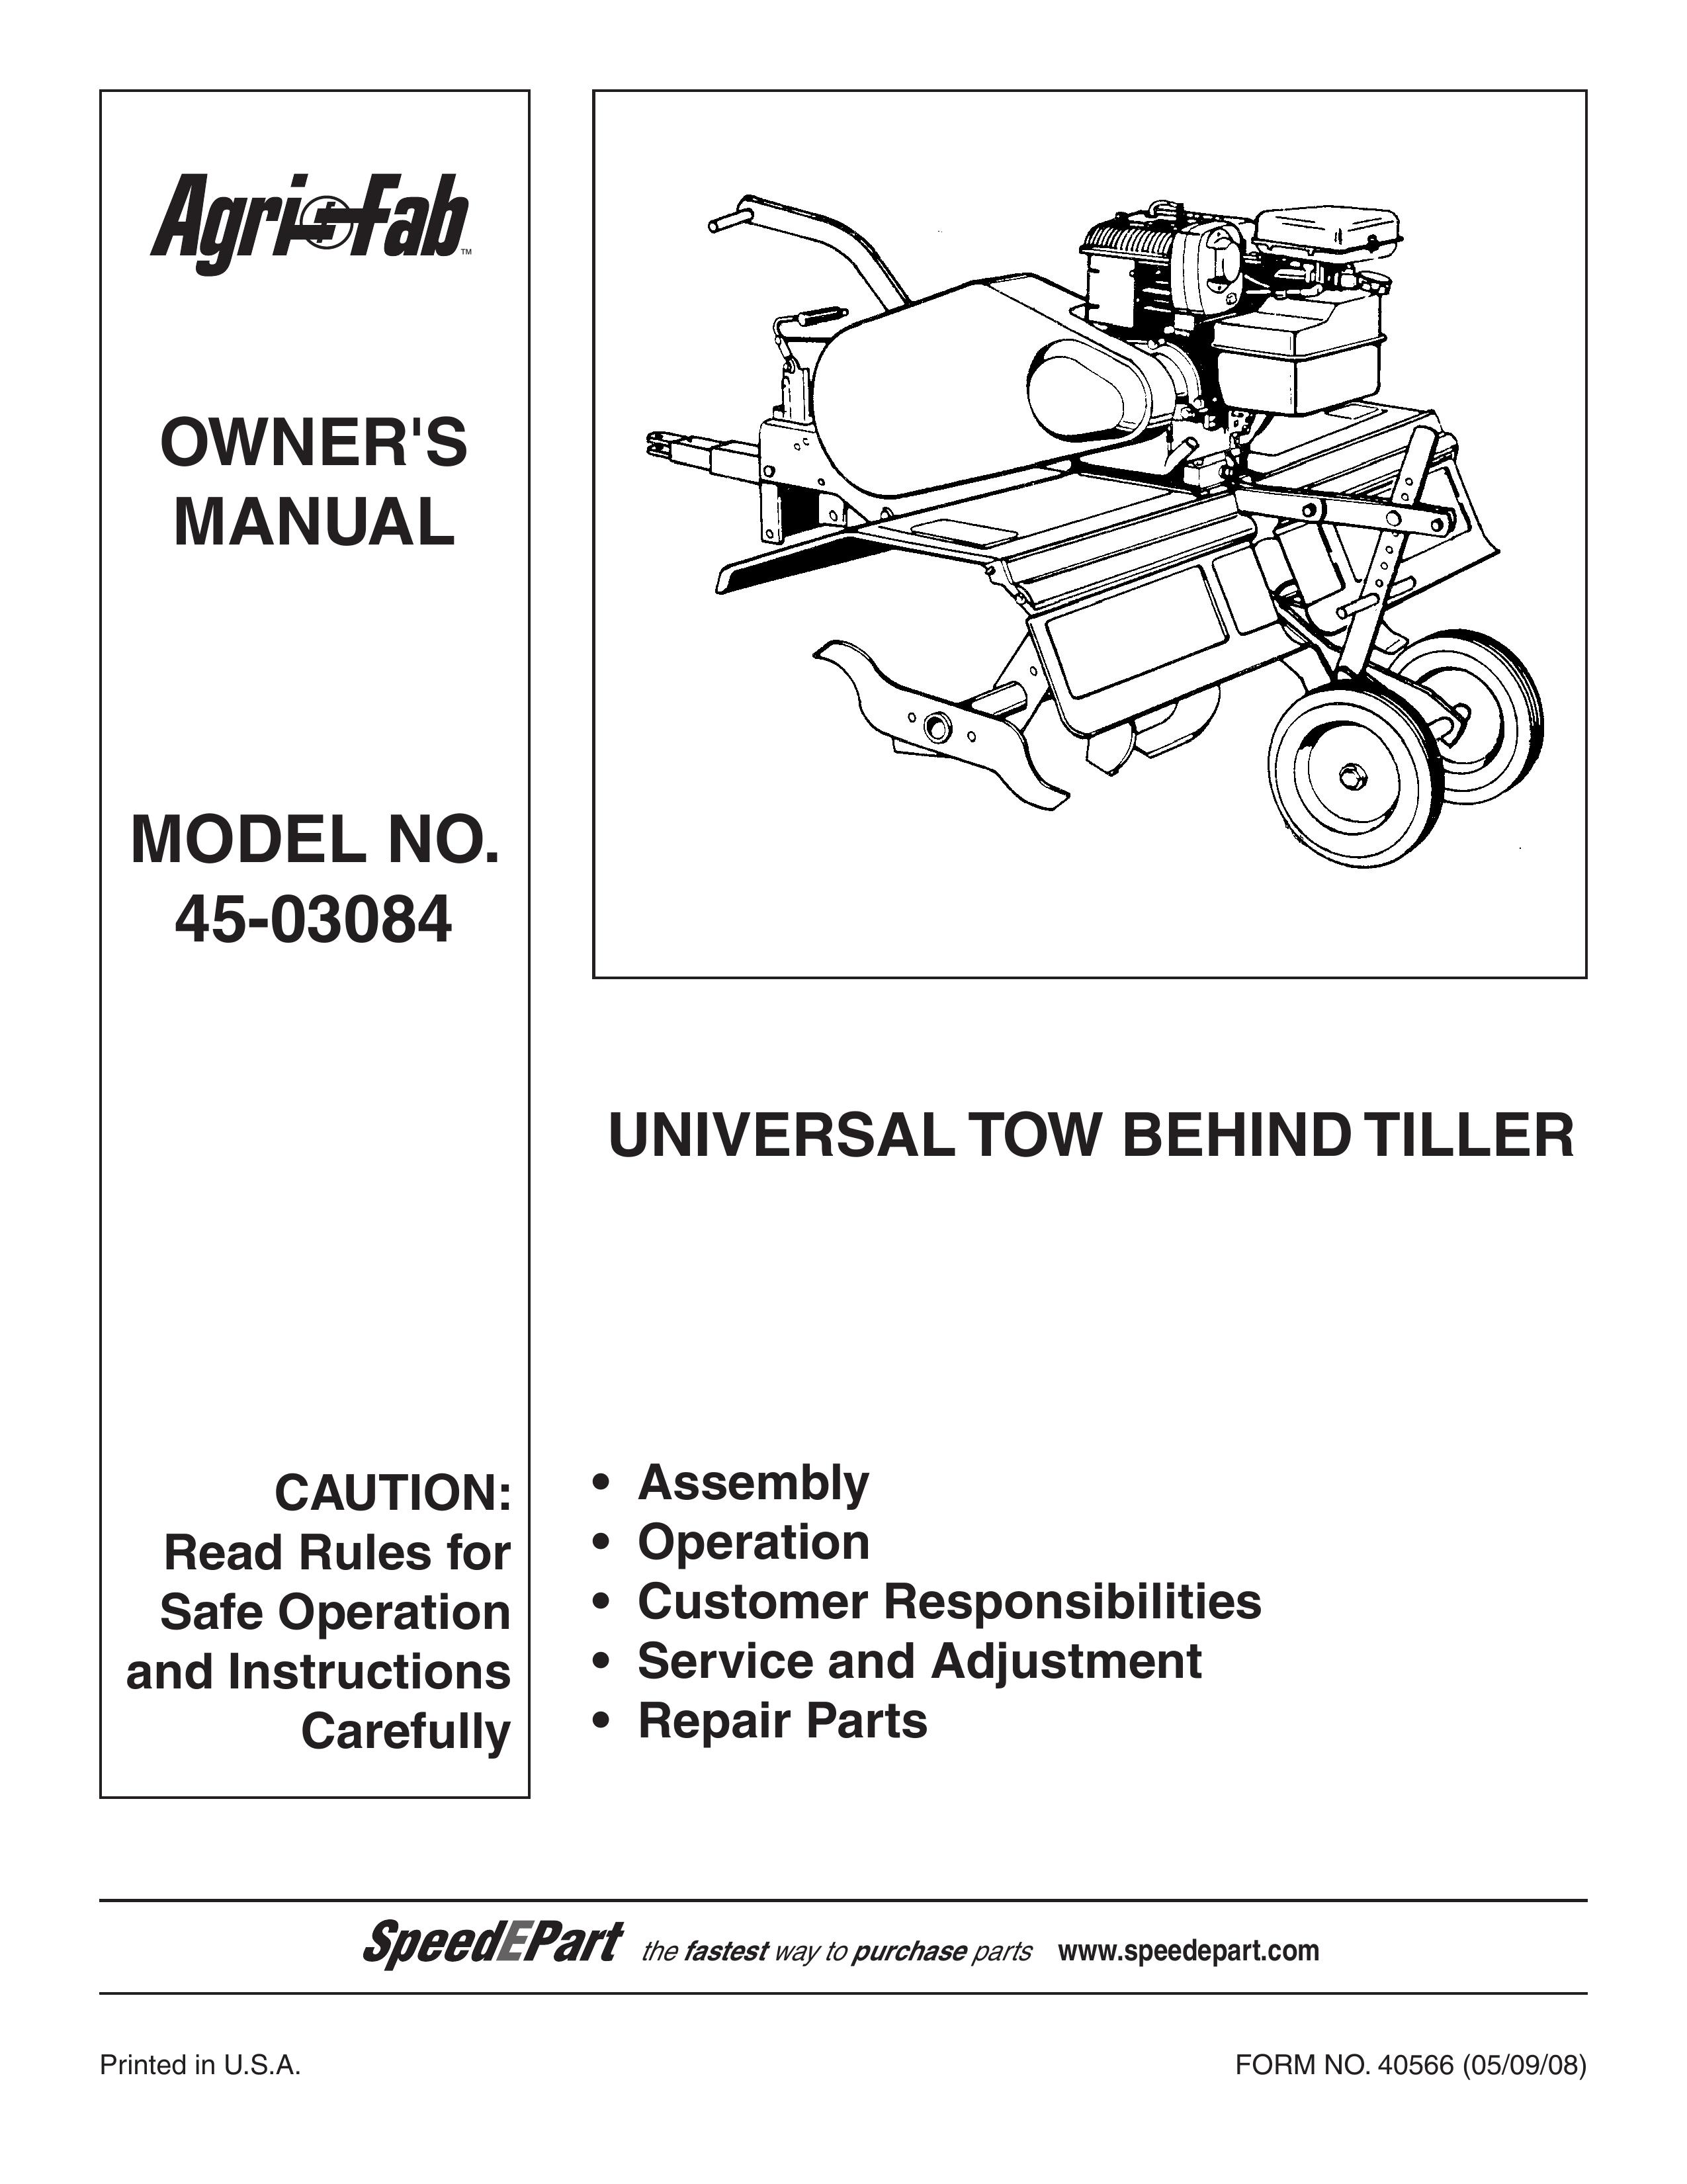 Agri-Fab 45-03084 Tiller User Manual